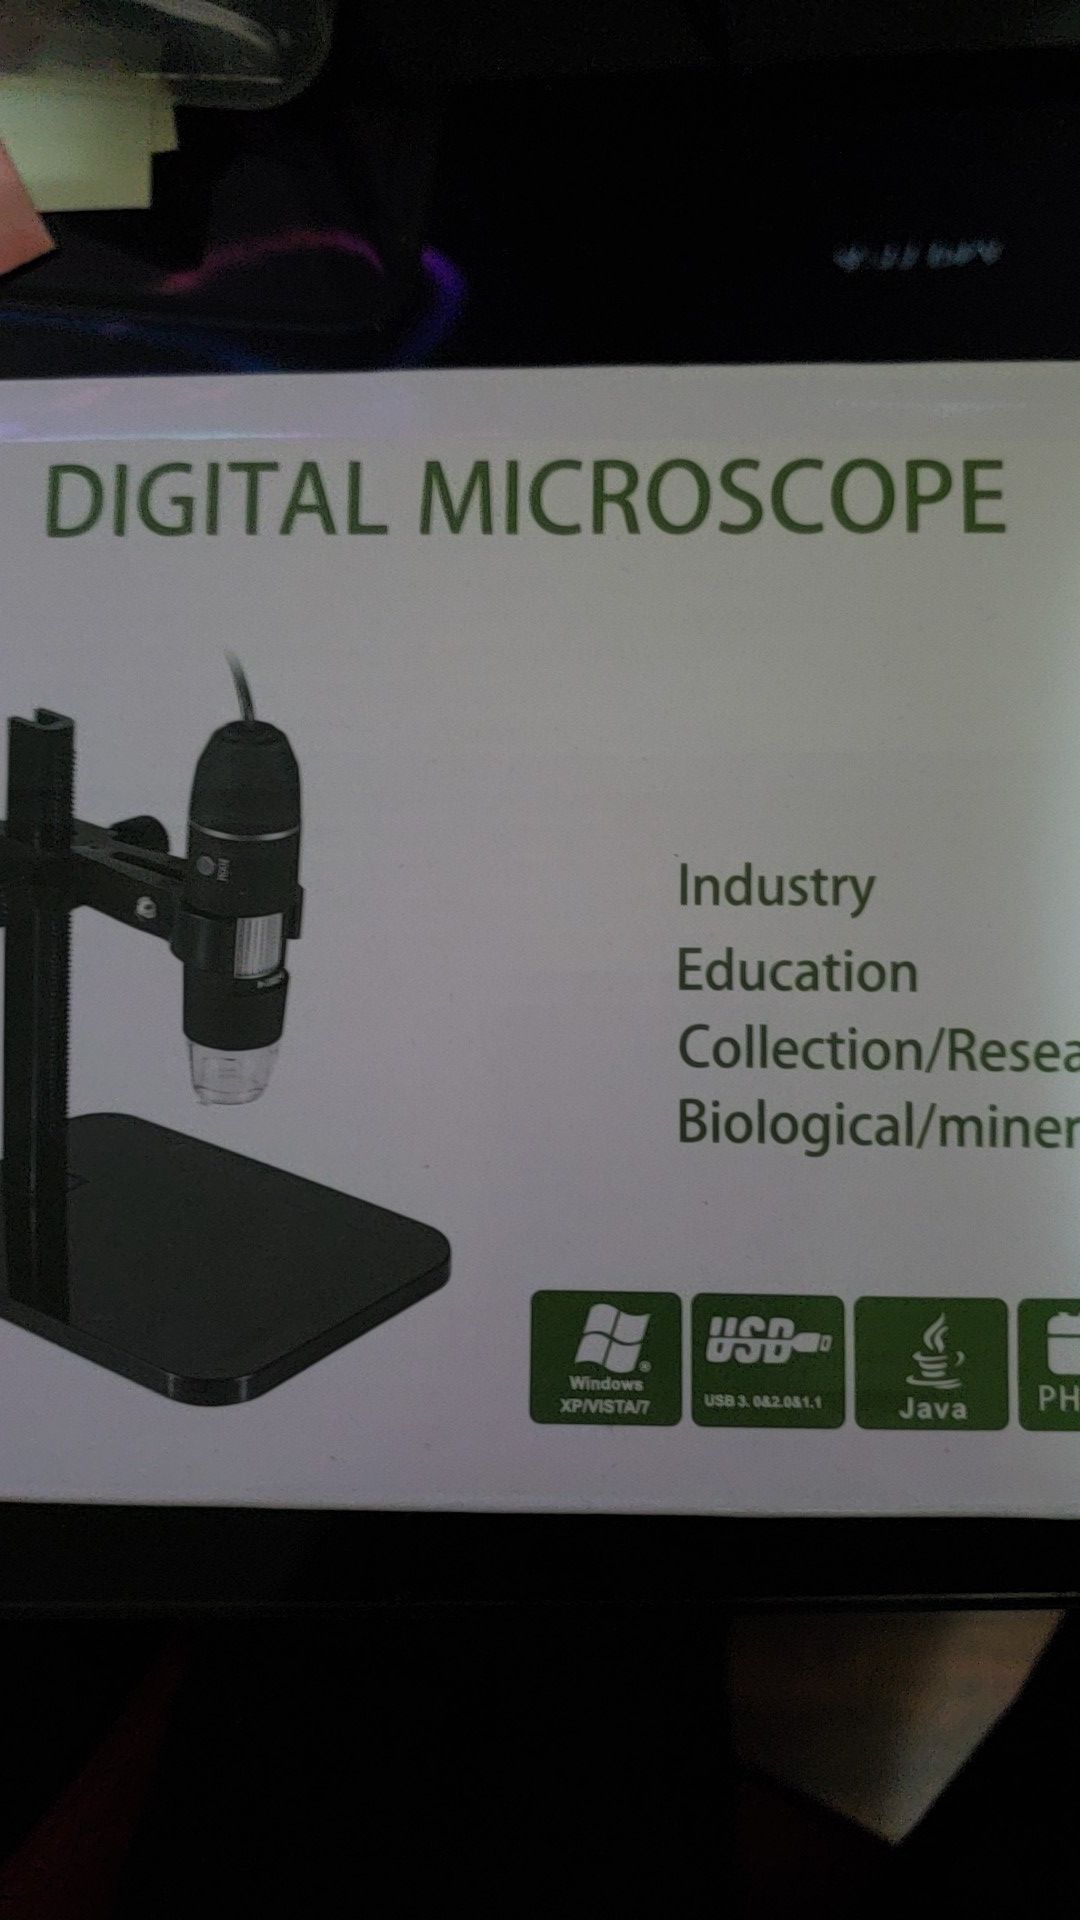 Digital USB Microscope. Windows xp/vista/7 usb 3.0